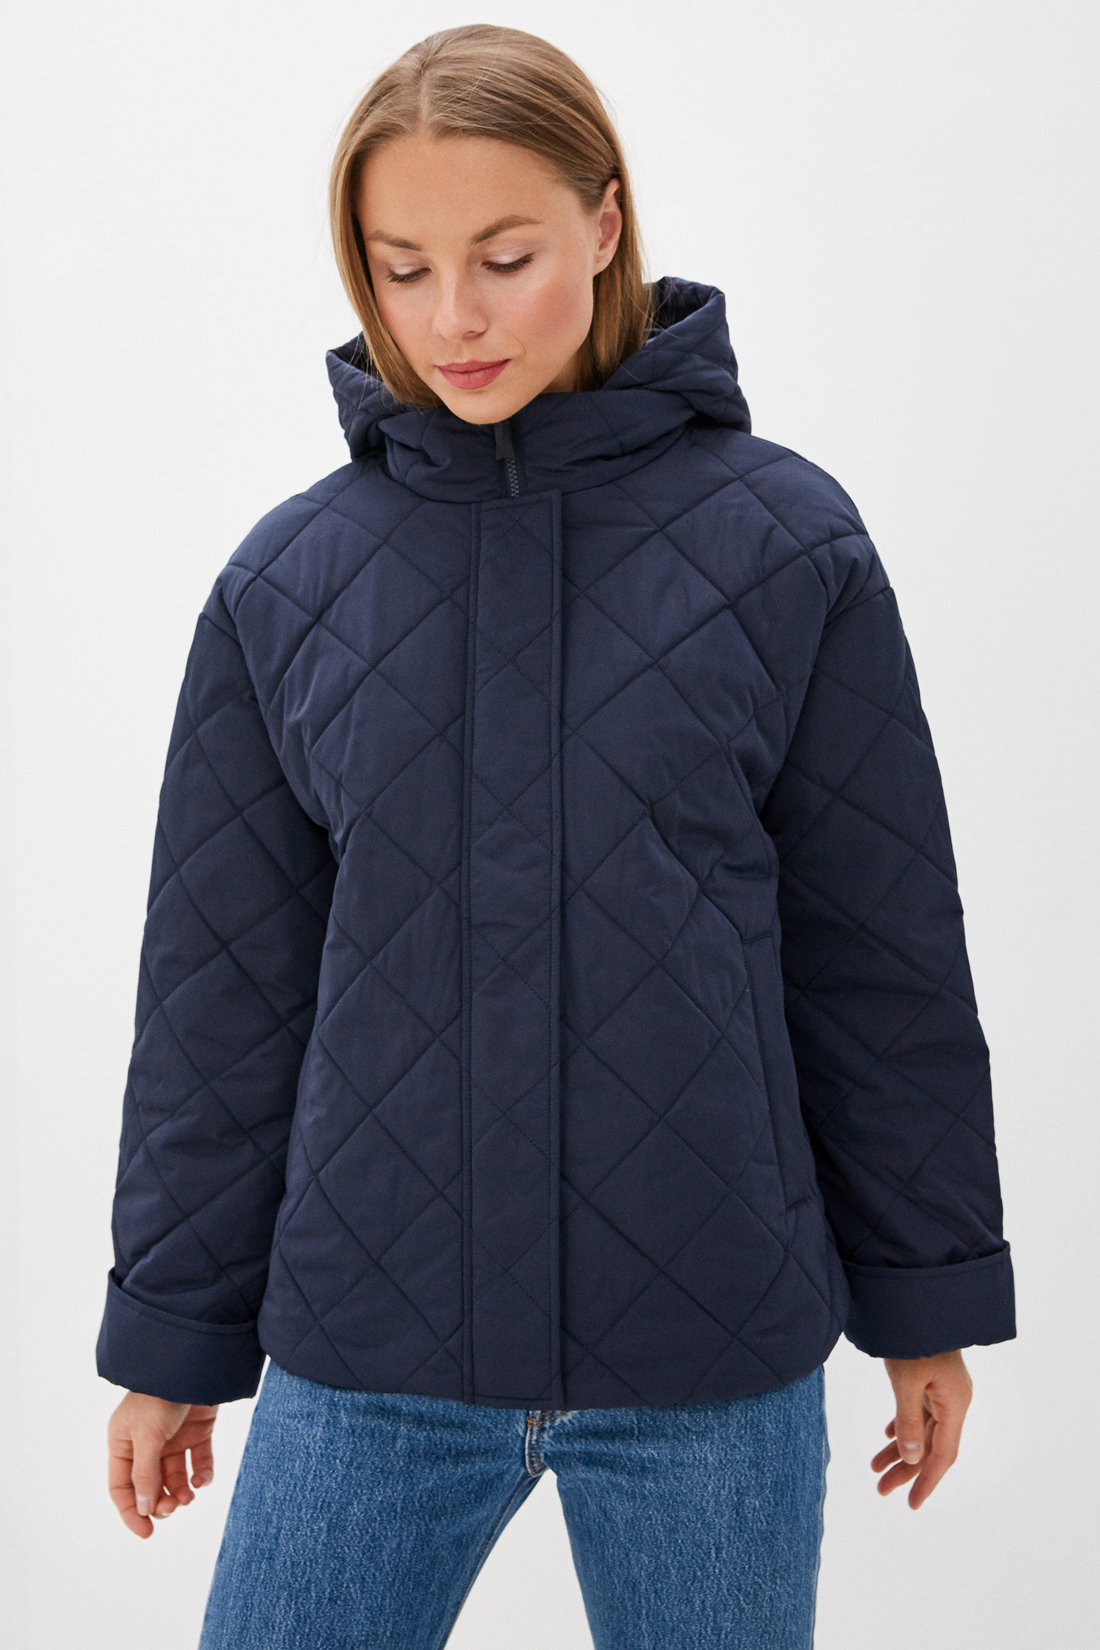 Стёганая куртка-оверсайз (арт. baon B030052), размер M, цвет синий Стёганая куртка-оверсайз (арт. baon B030052) - фото 1